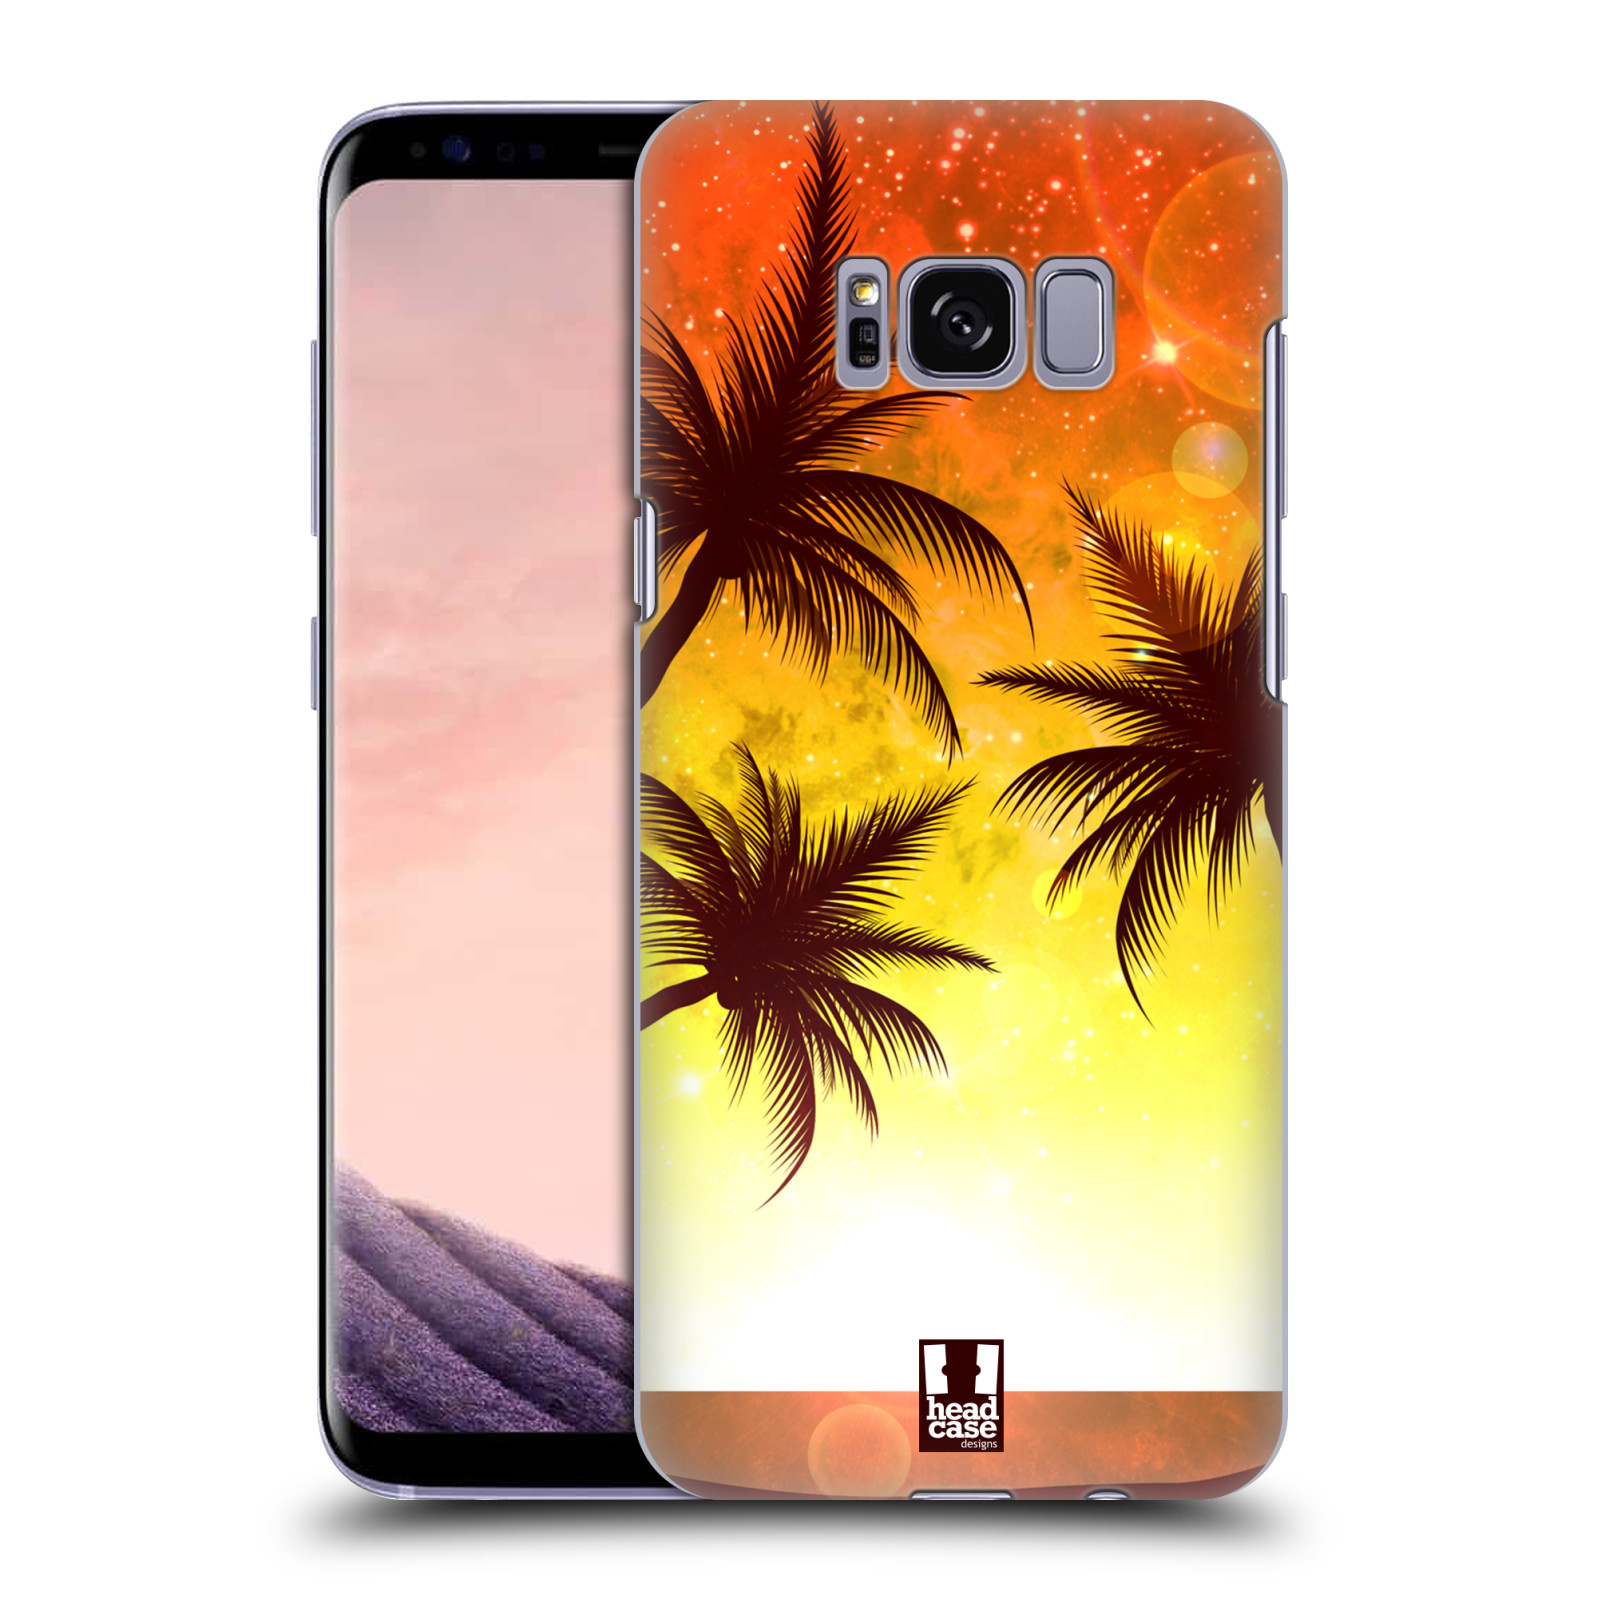 HEAD CASE plastový obal na mobil Samsung Galaxy S8 vzor Kreslený motiv silueta moře a palmy ORANŽOVÁ